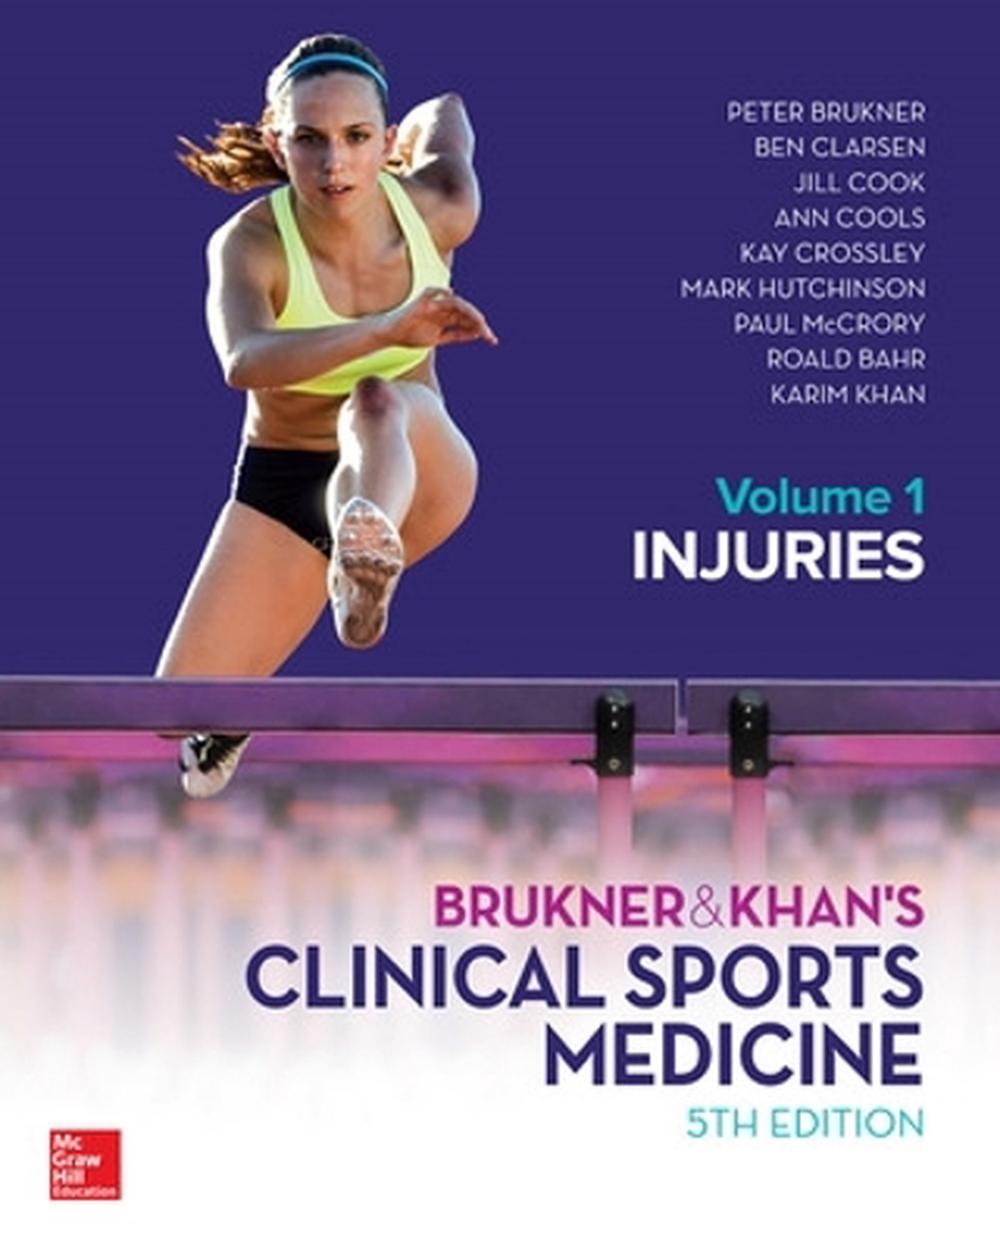 Brukner & Khan's Clinical Sports Medicine Injuries, Volume 1, 5th